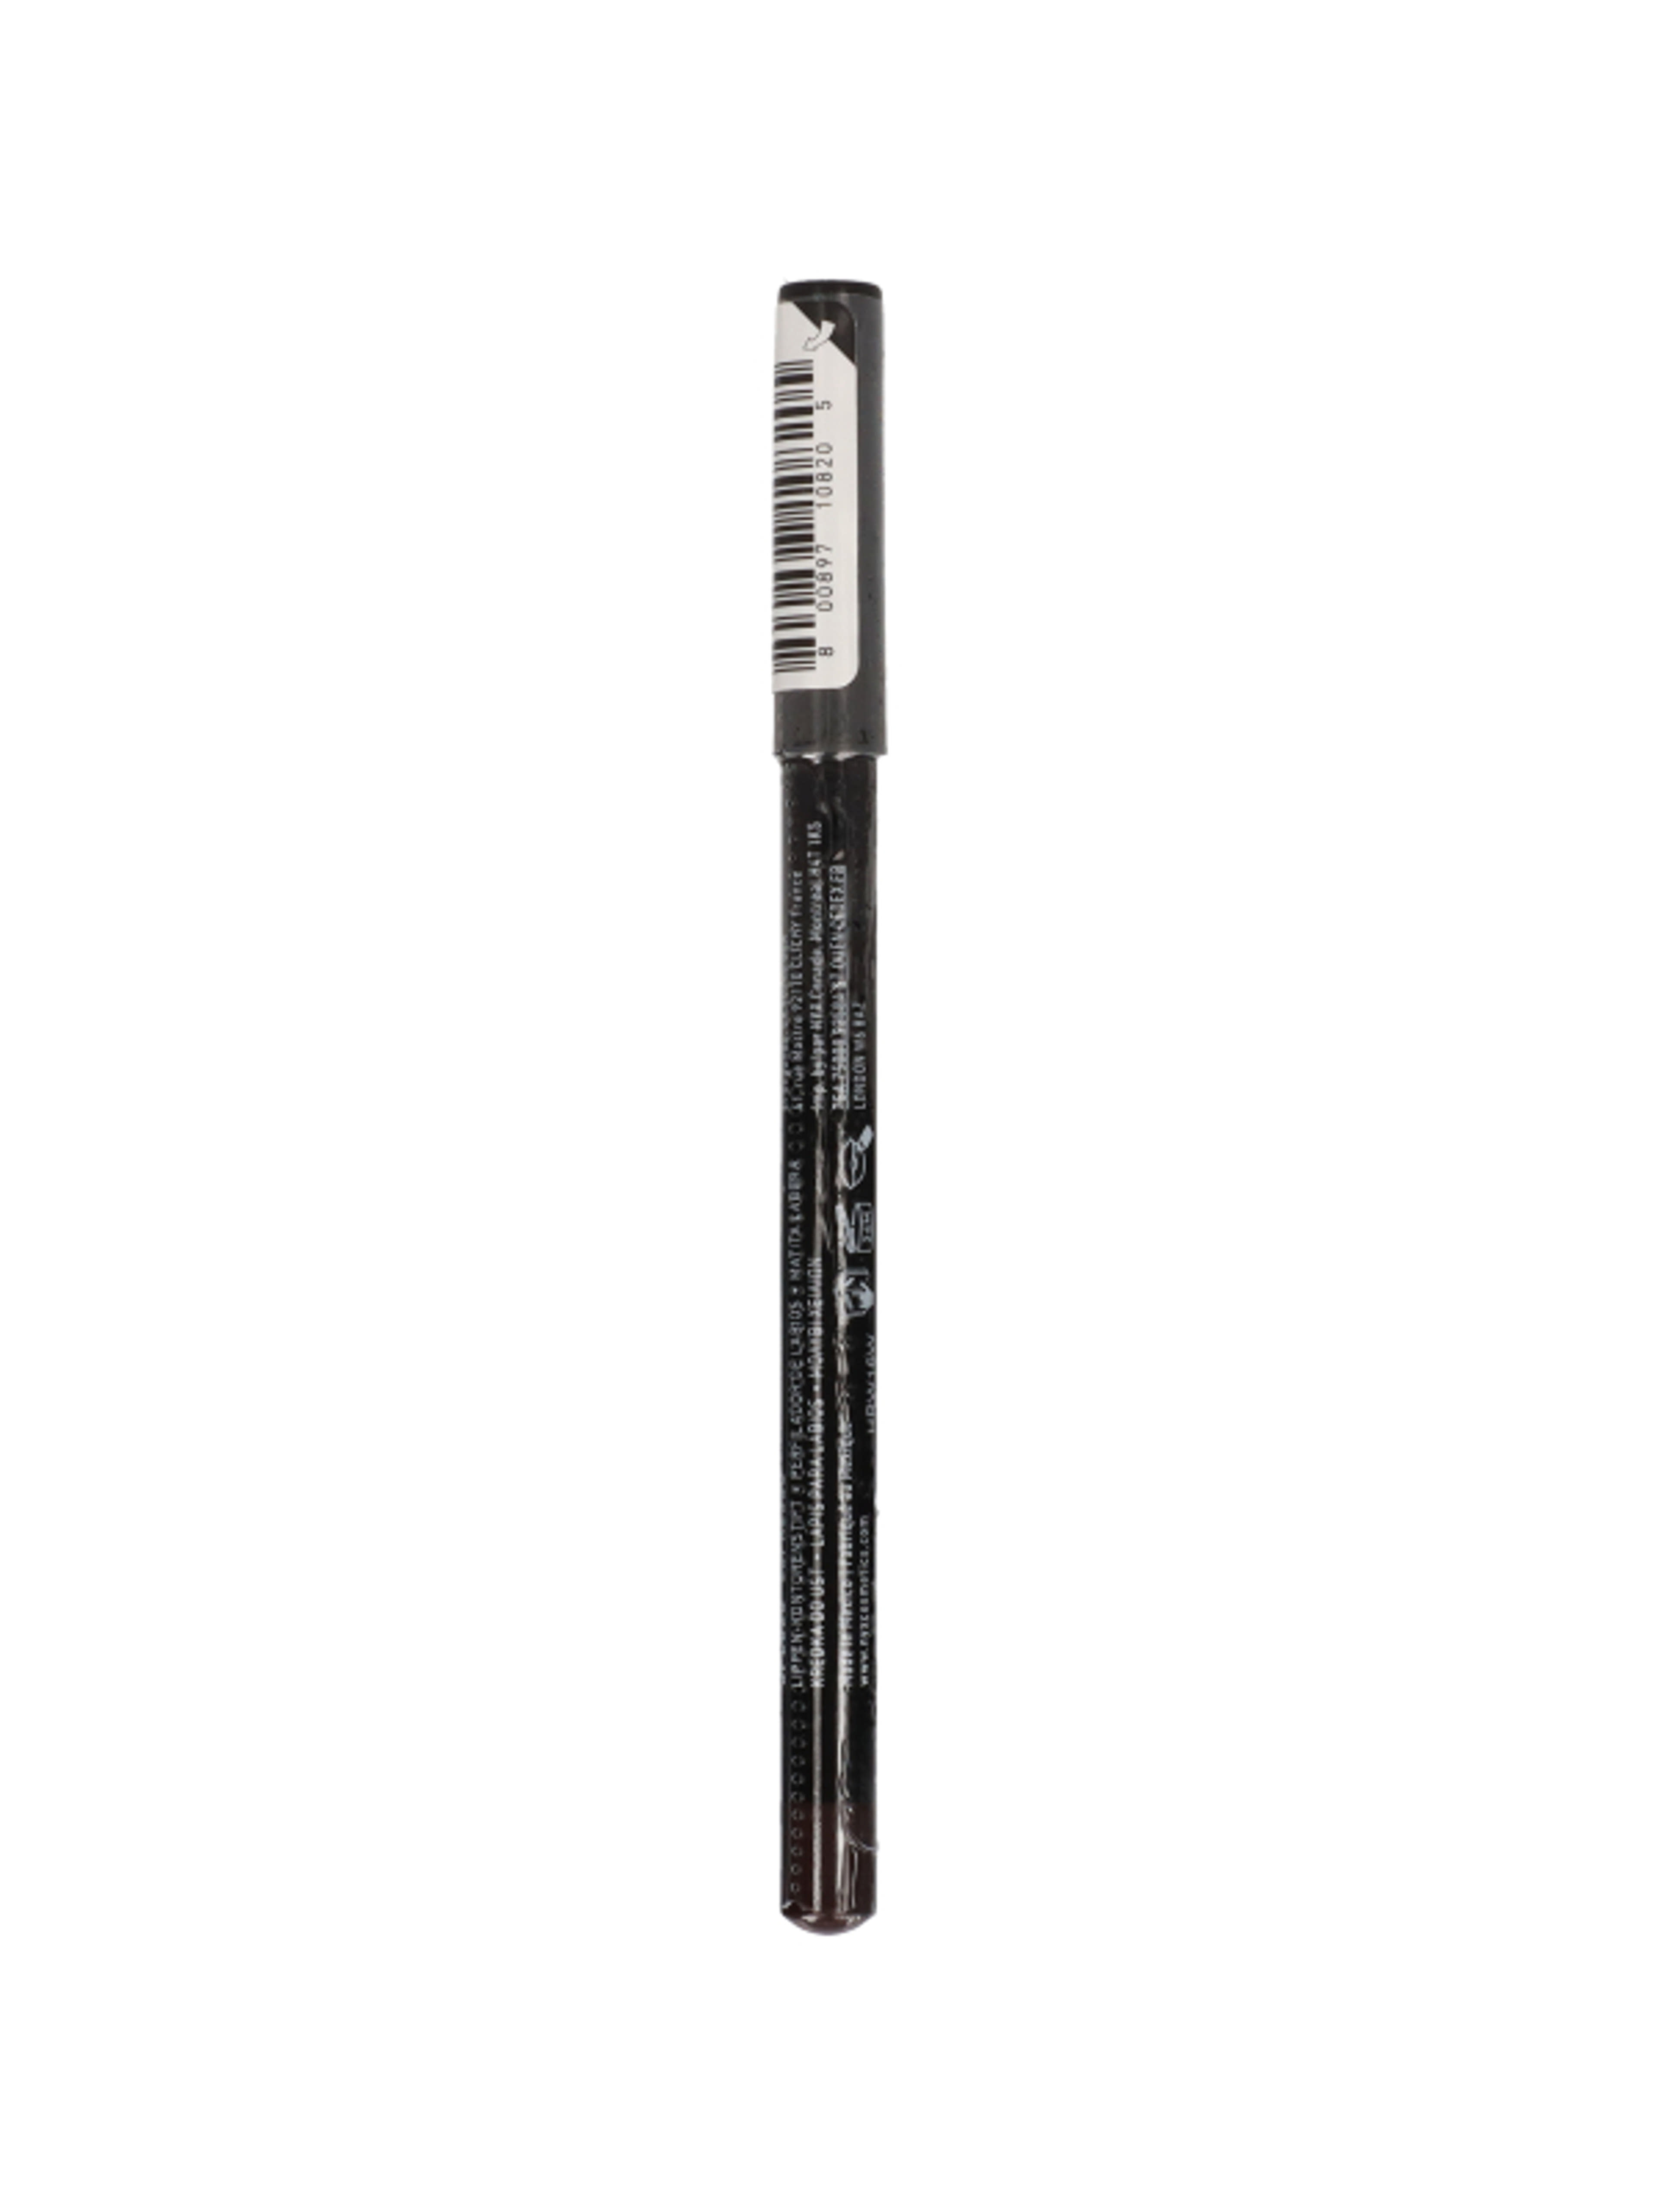 NYX Professional Makeup Slim Lip Pencil ajakkontúr ceruza, Espresso - 1 db-5